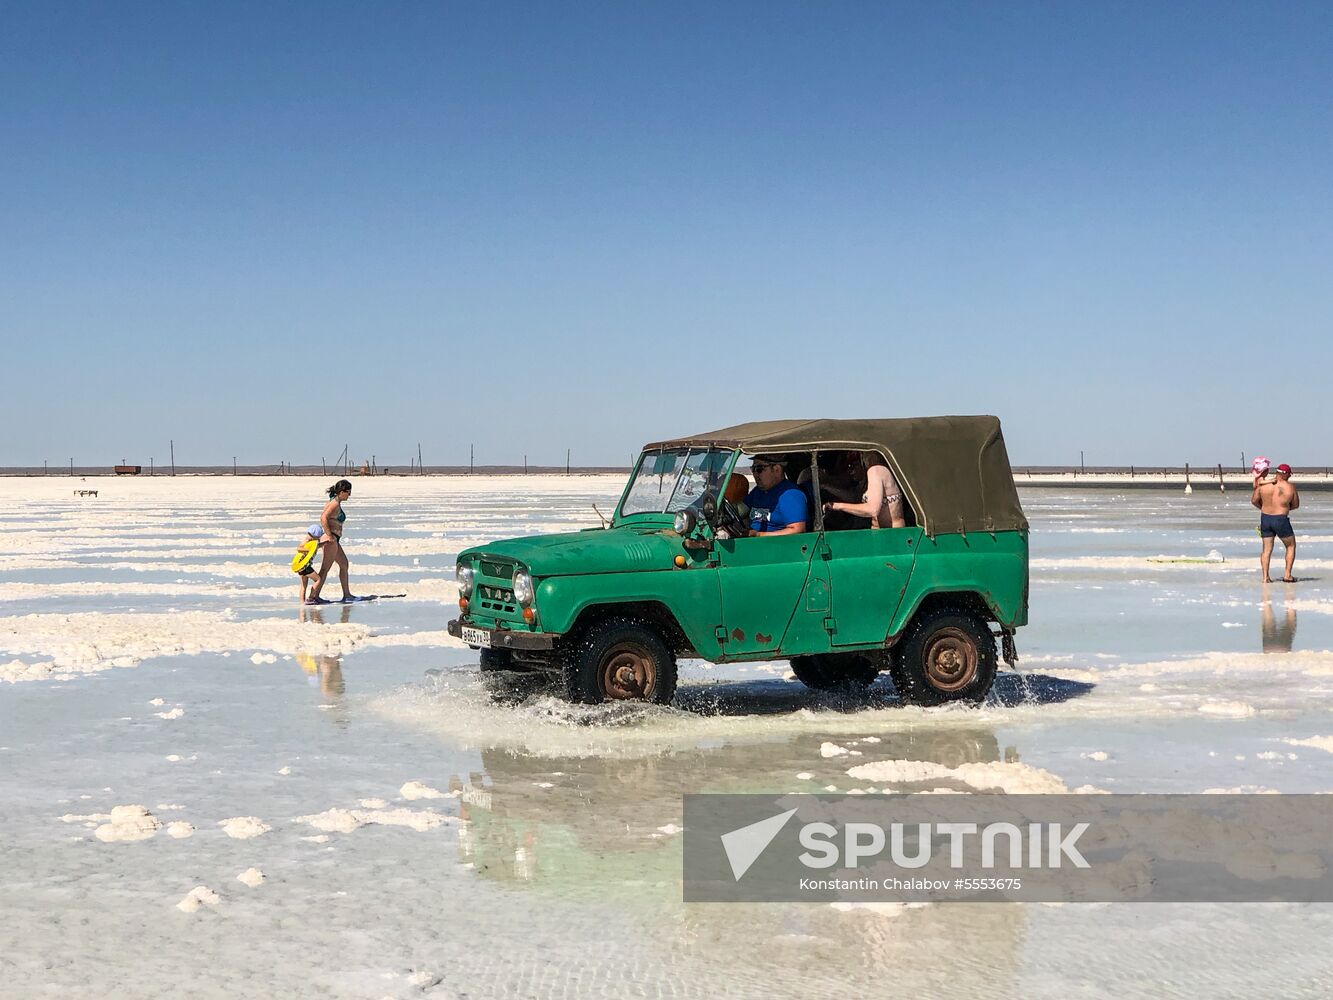 Salt lake Baskunchak